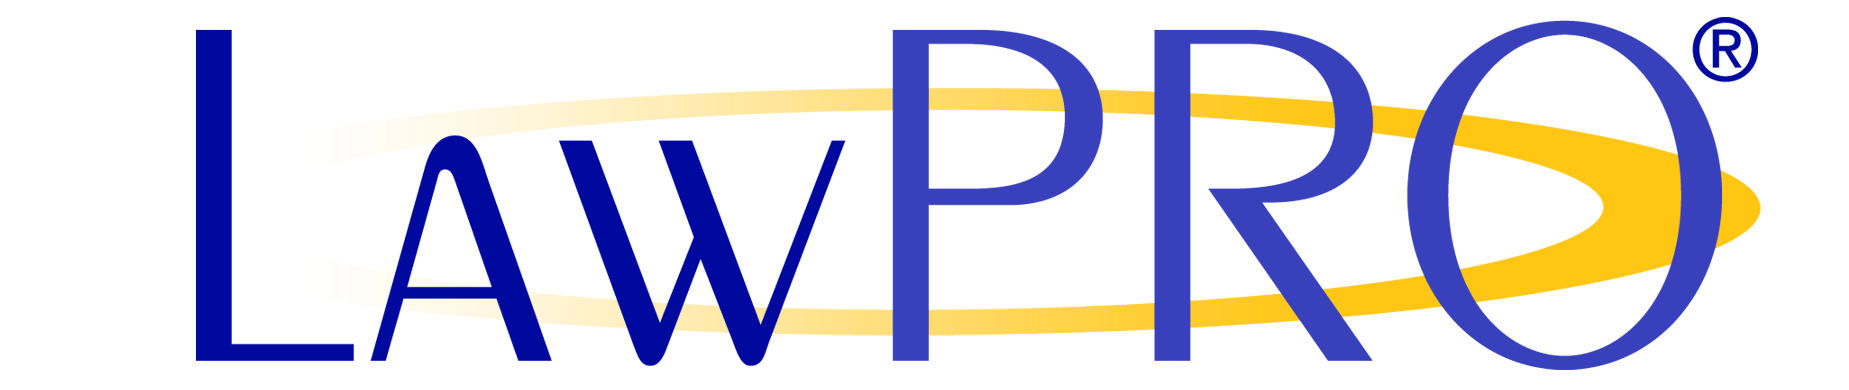 LAWPRO logo